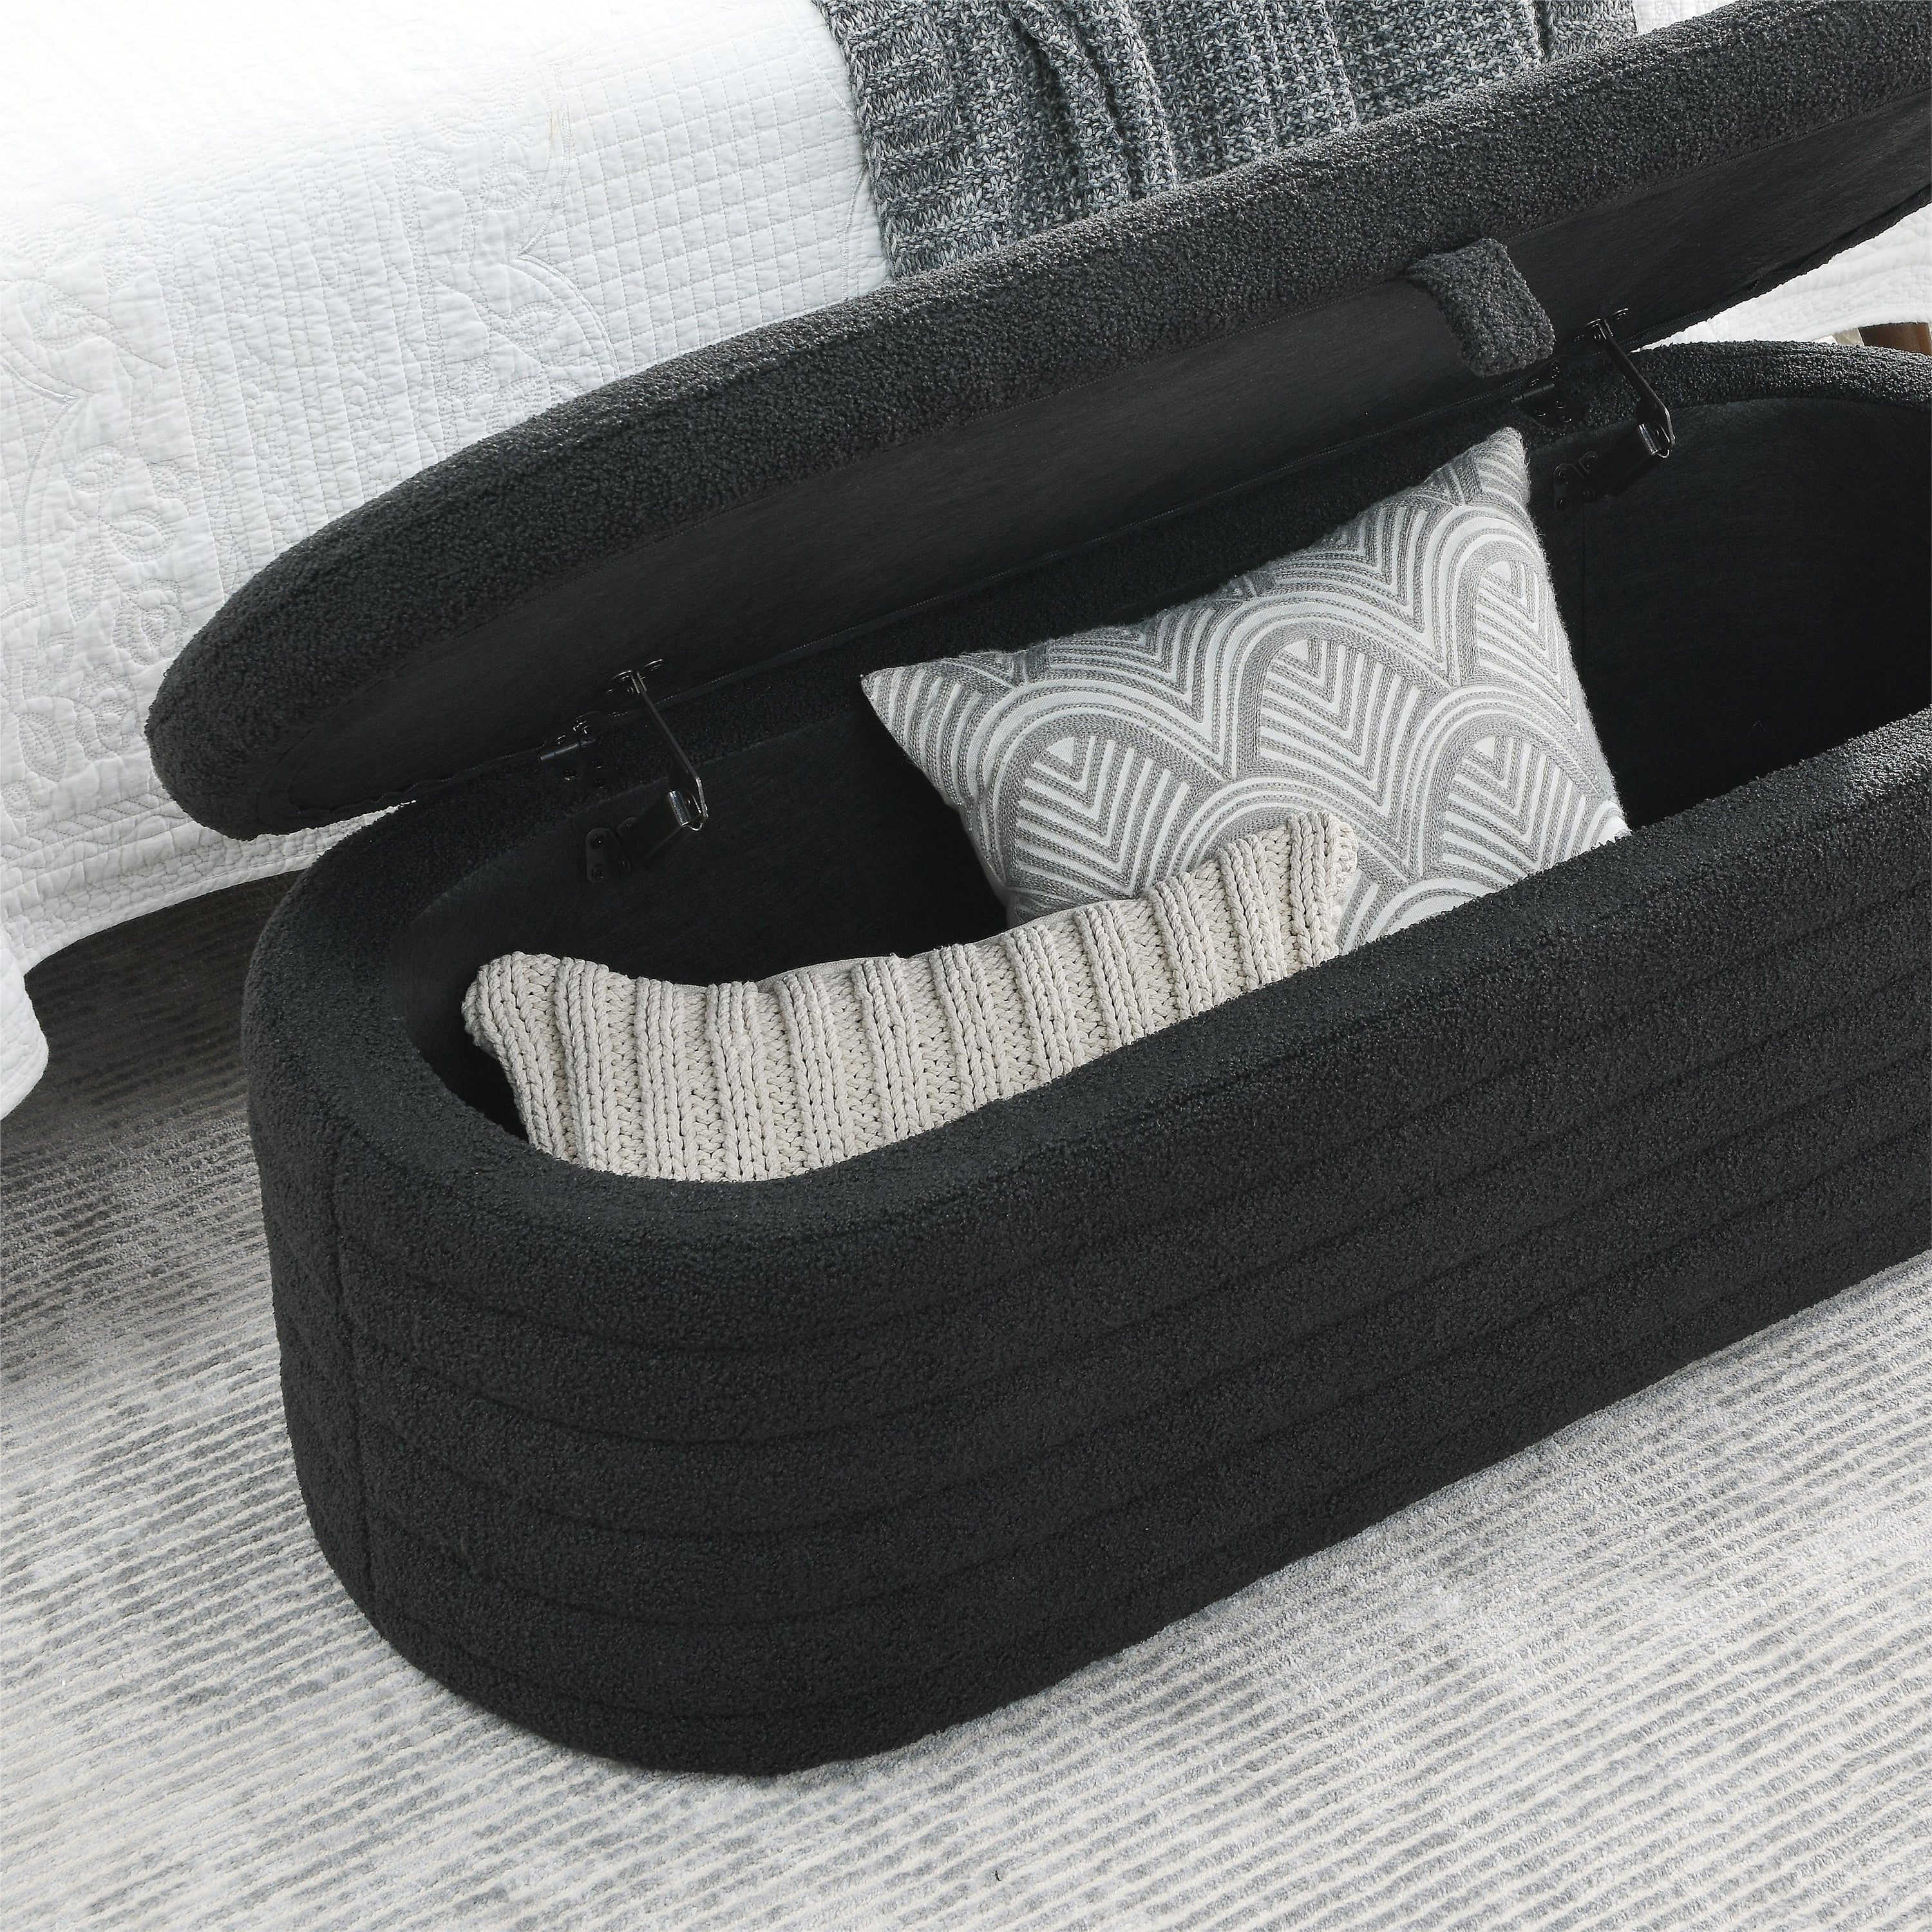 Storage Ottoman Bench Upholstered Fabric Storage - Black teddy